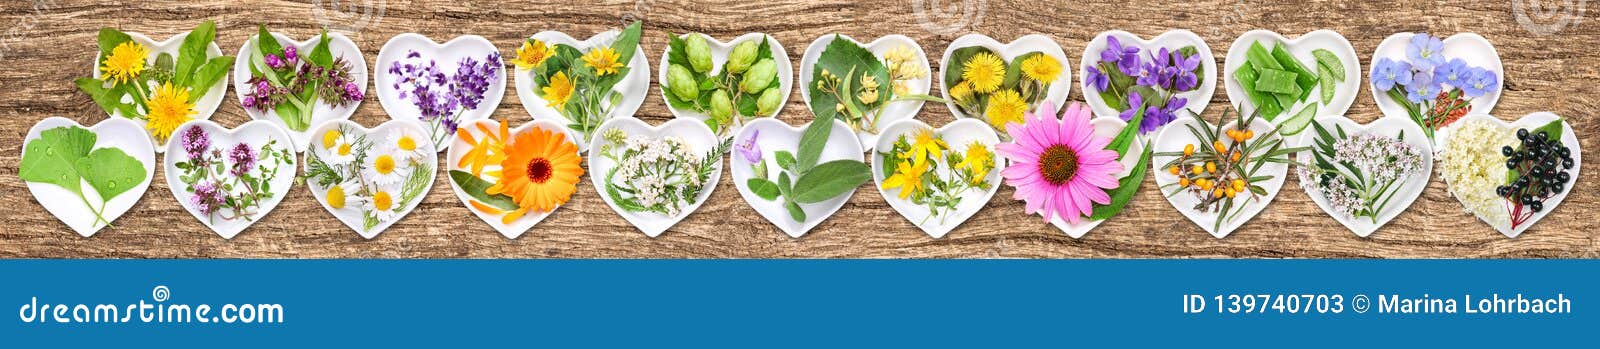 the most important medicinal plants